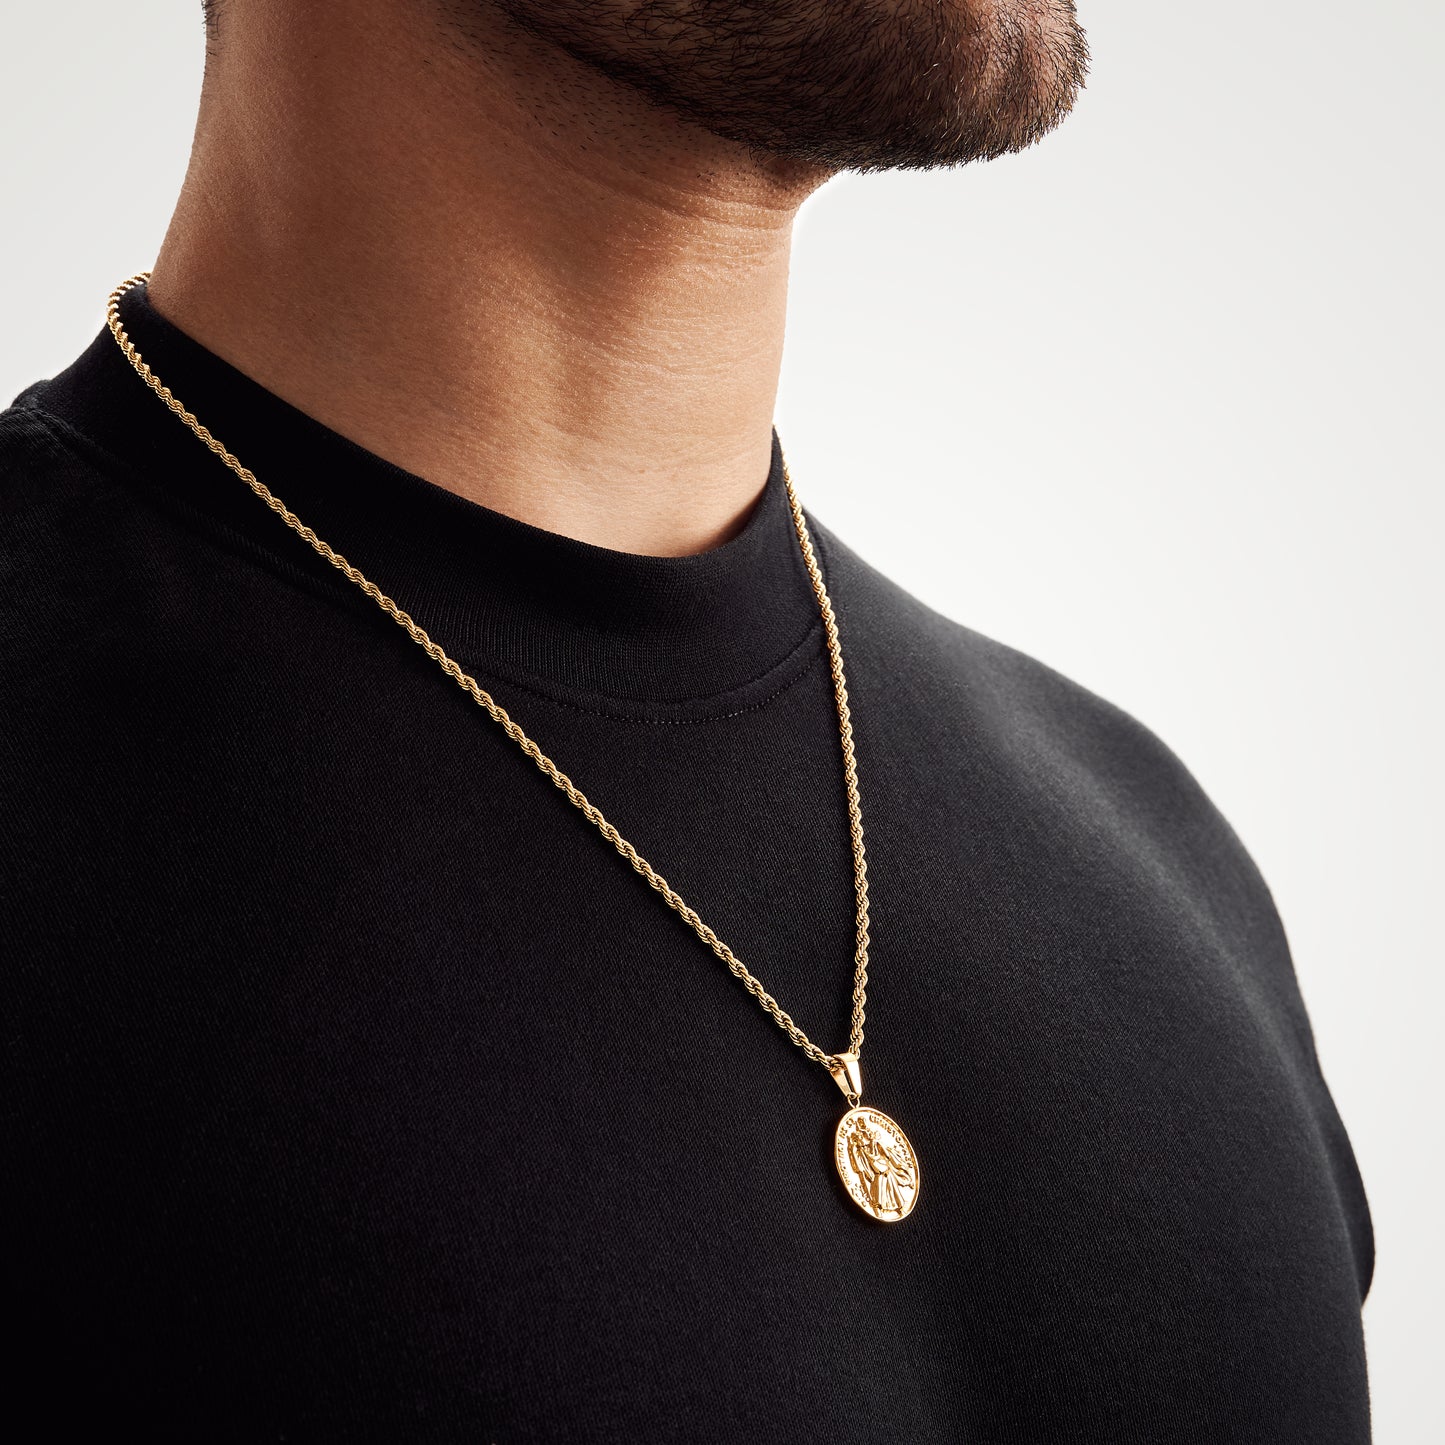 Gold Engraved saint christopher jewellery pendant necklace men's jewellery Apollo Untold